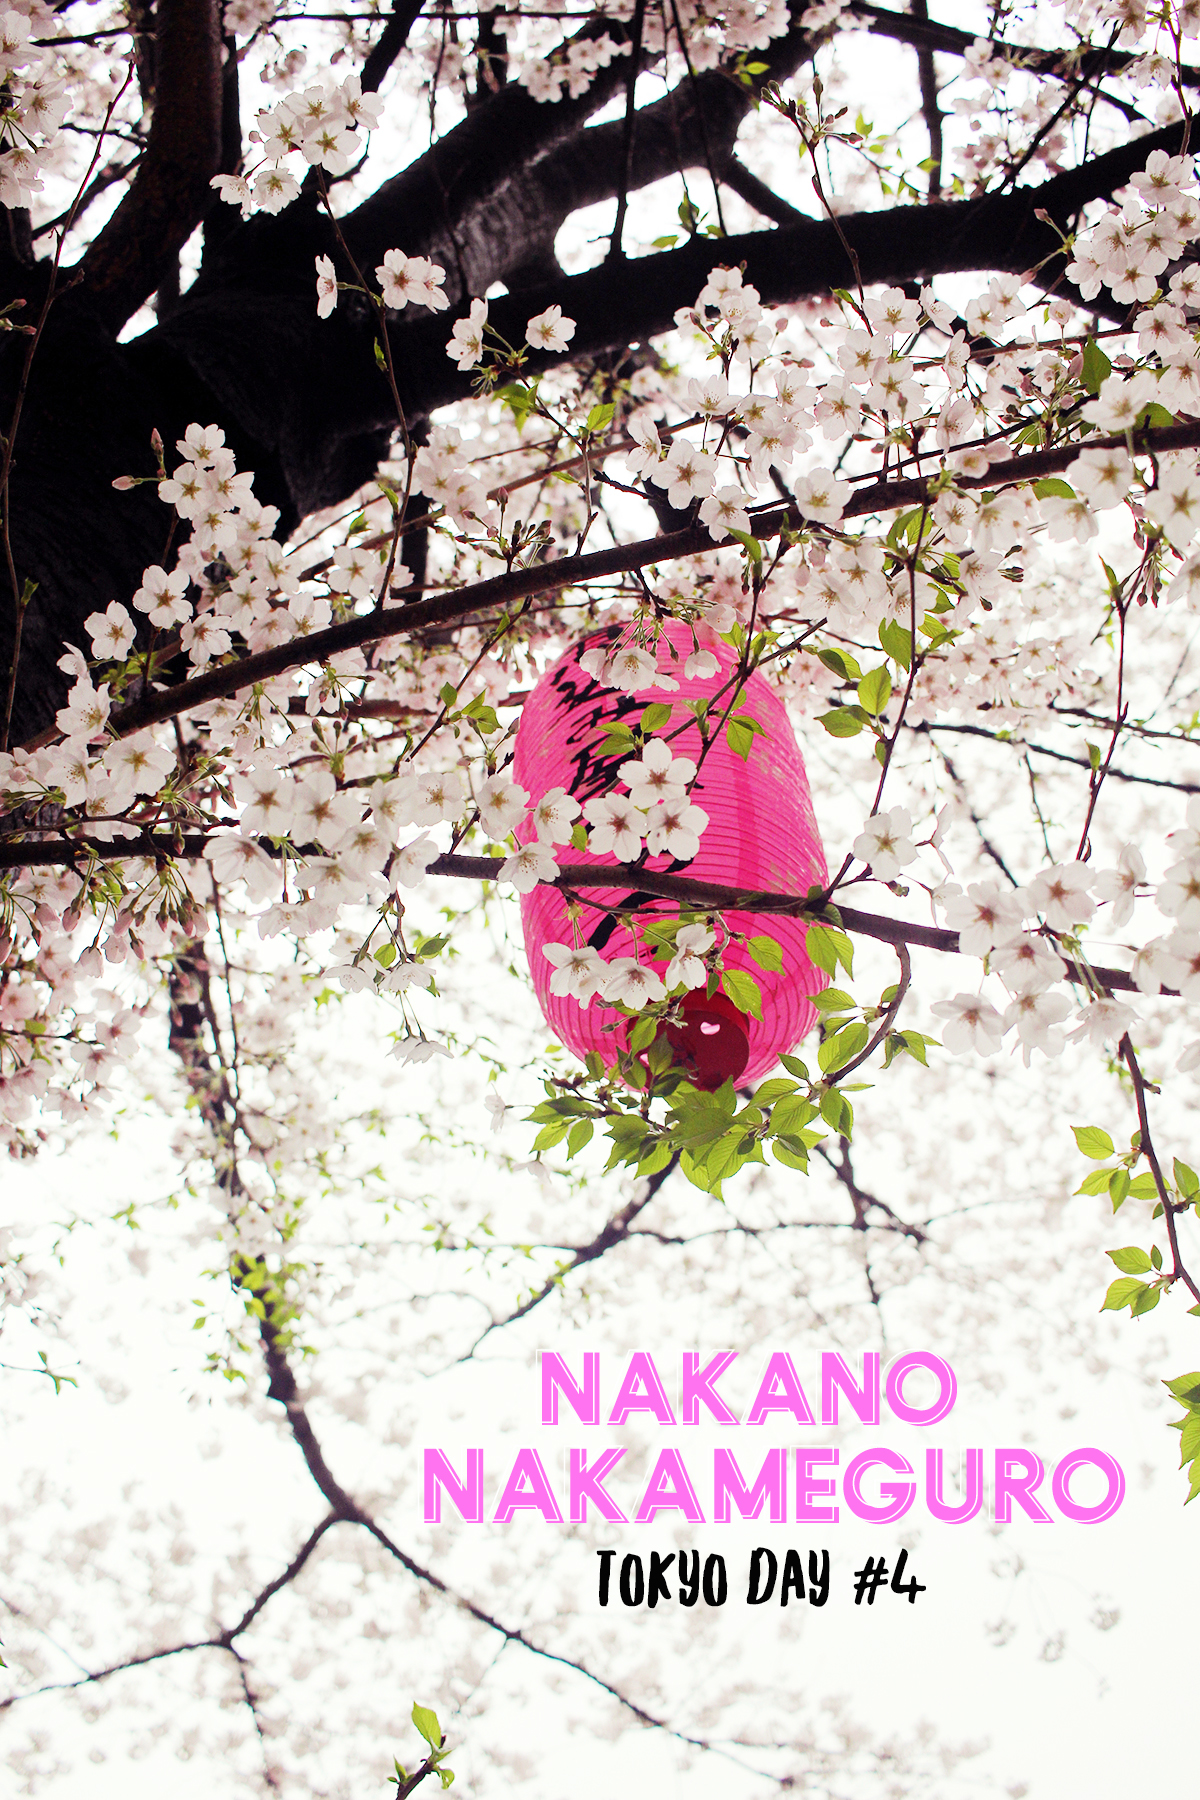 Tokyo mon carnet d’adresses #day 4 Nakano et Nakameguro